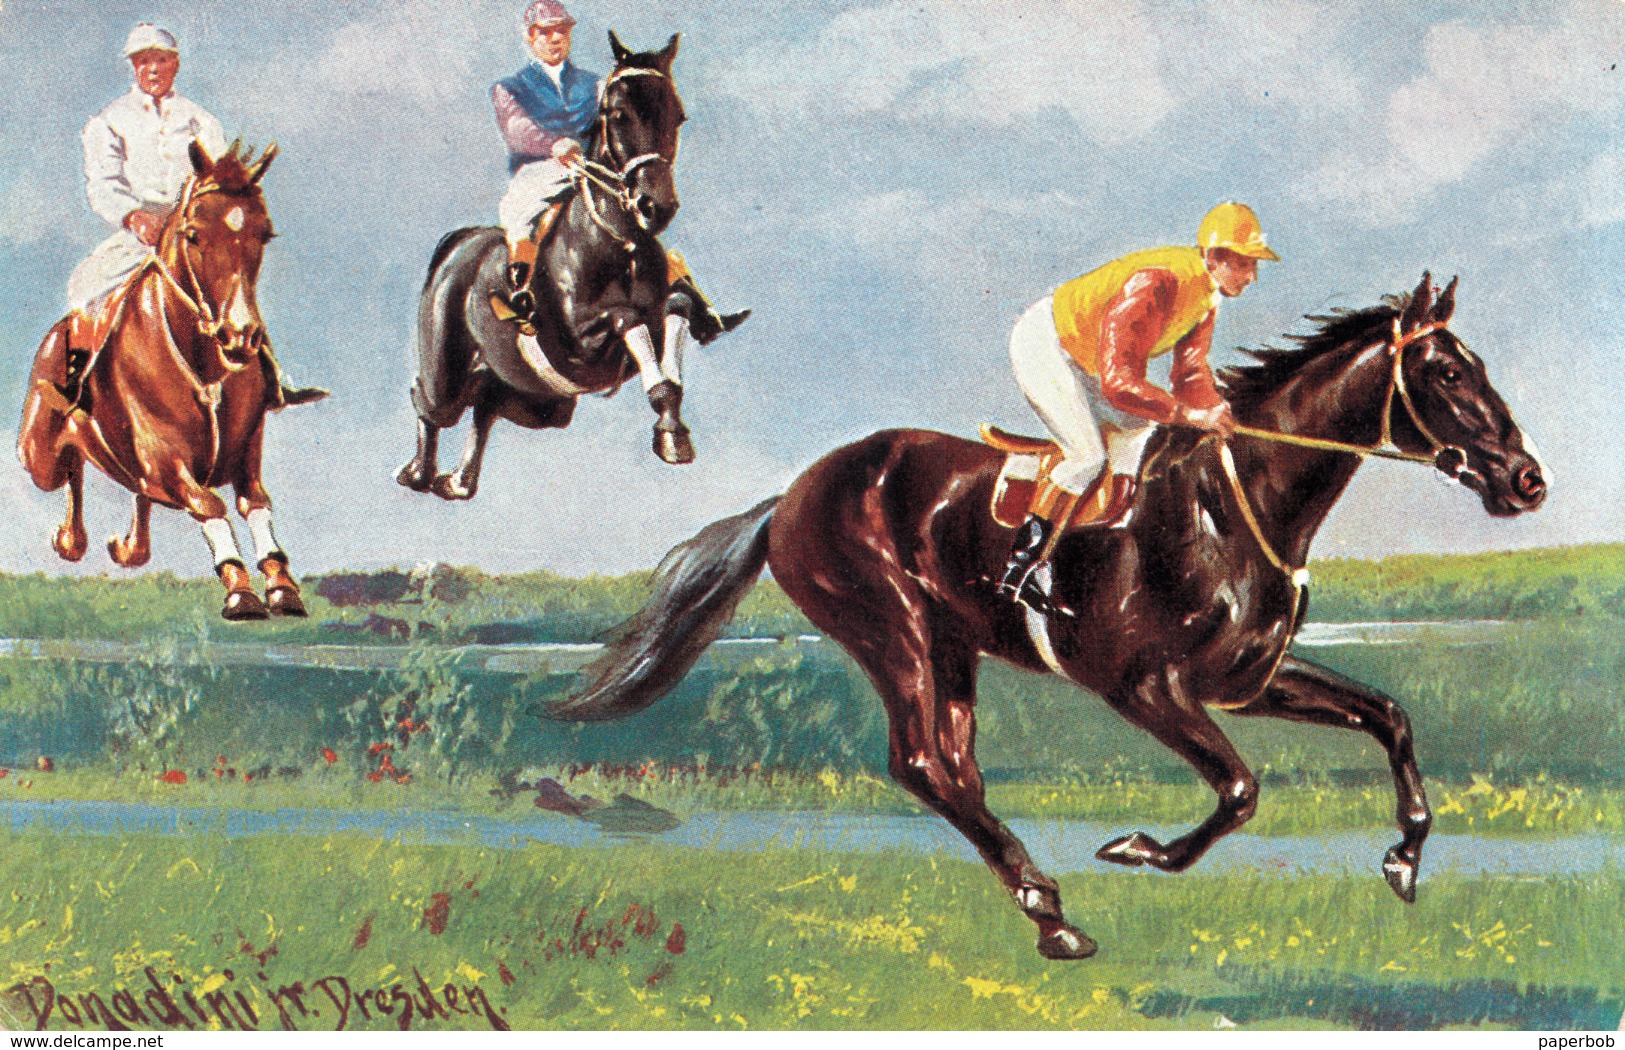 DONADINI - HORSE RACE - Donadini, Antonio